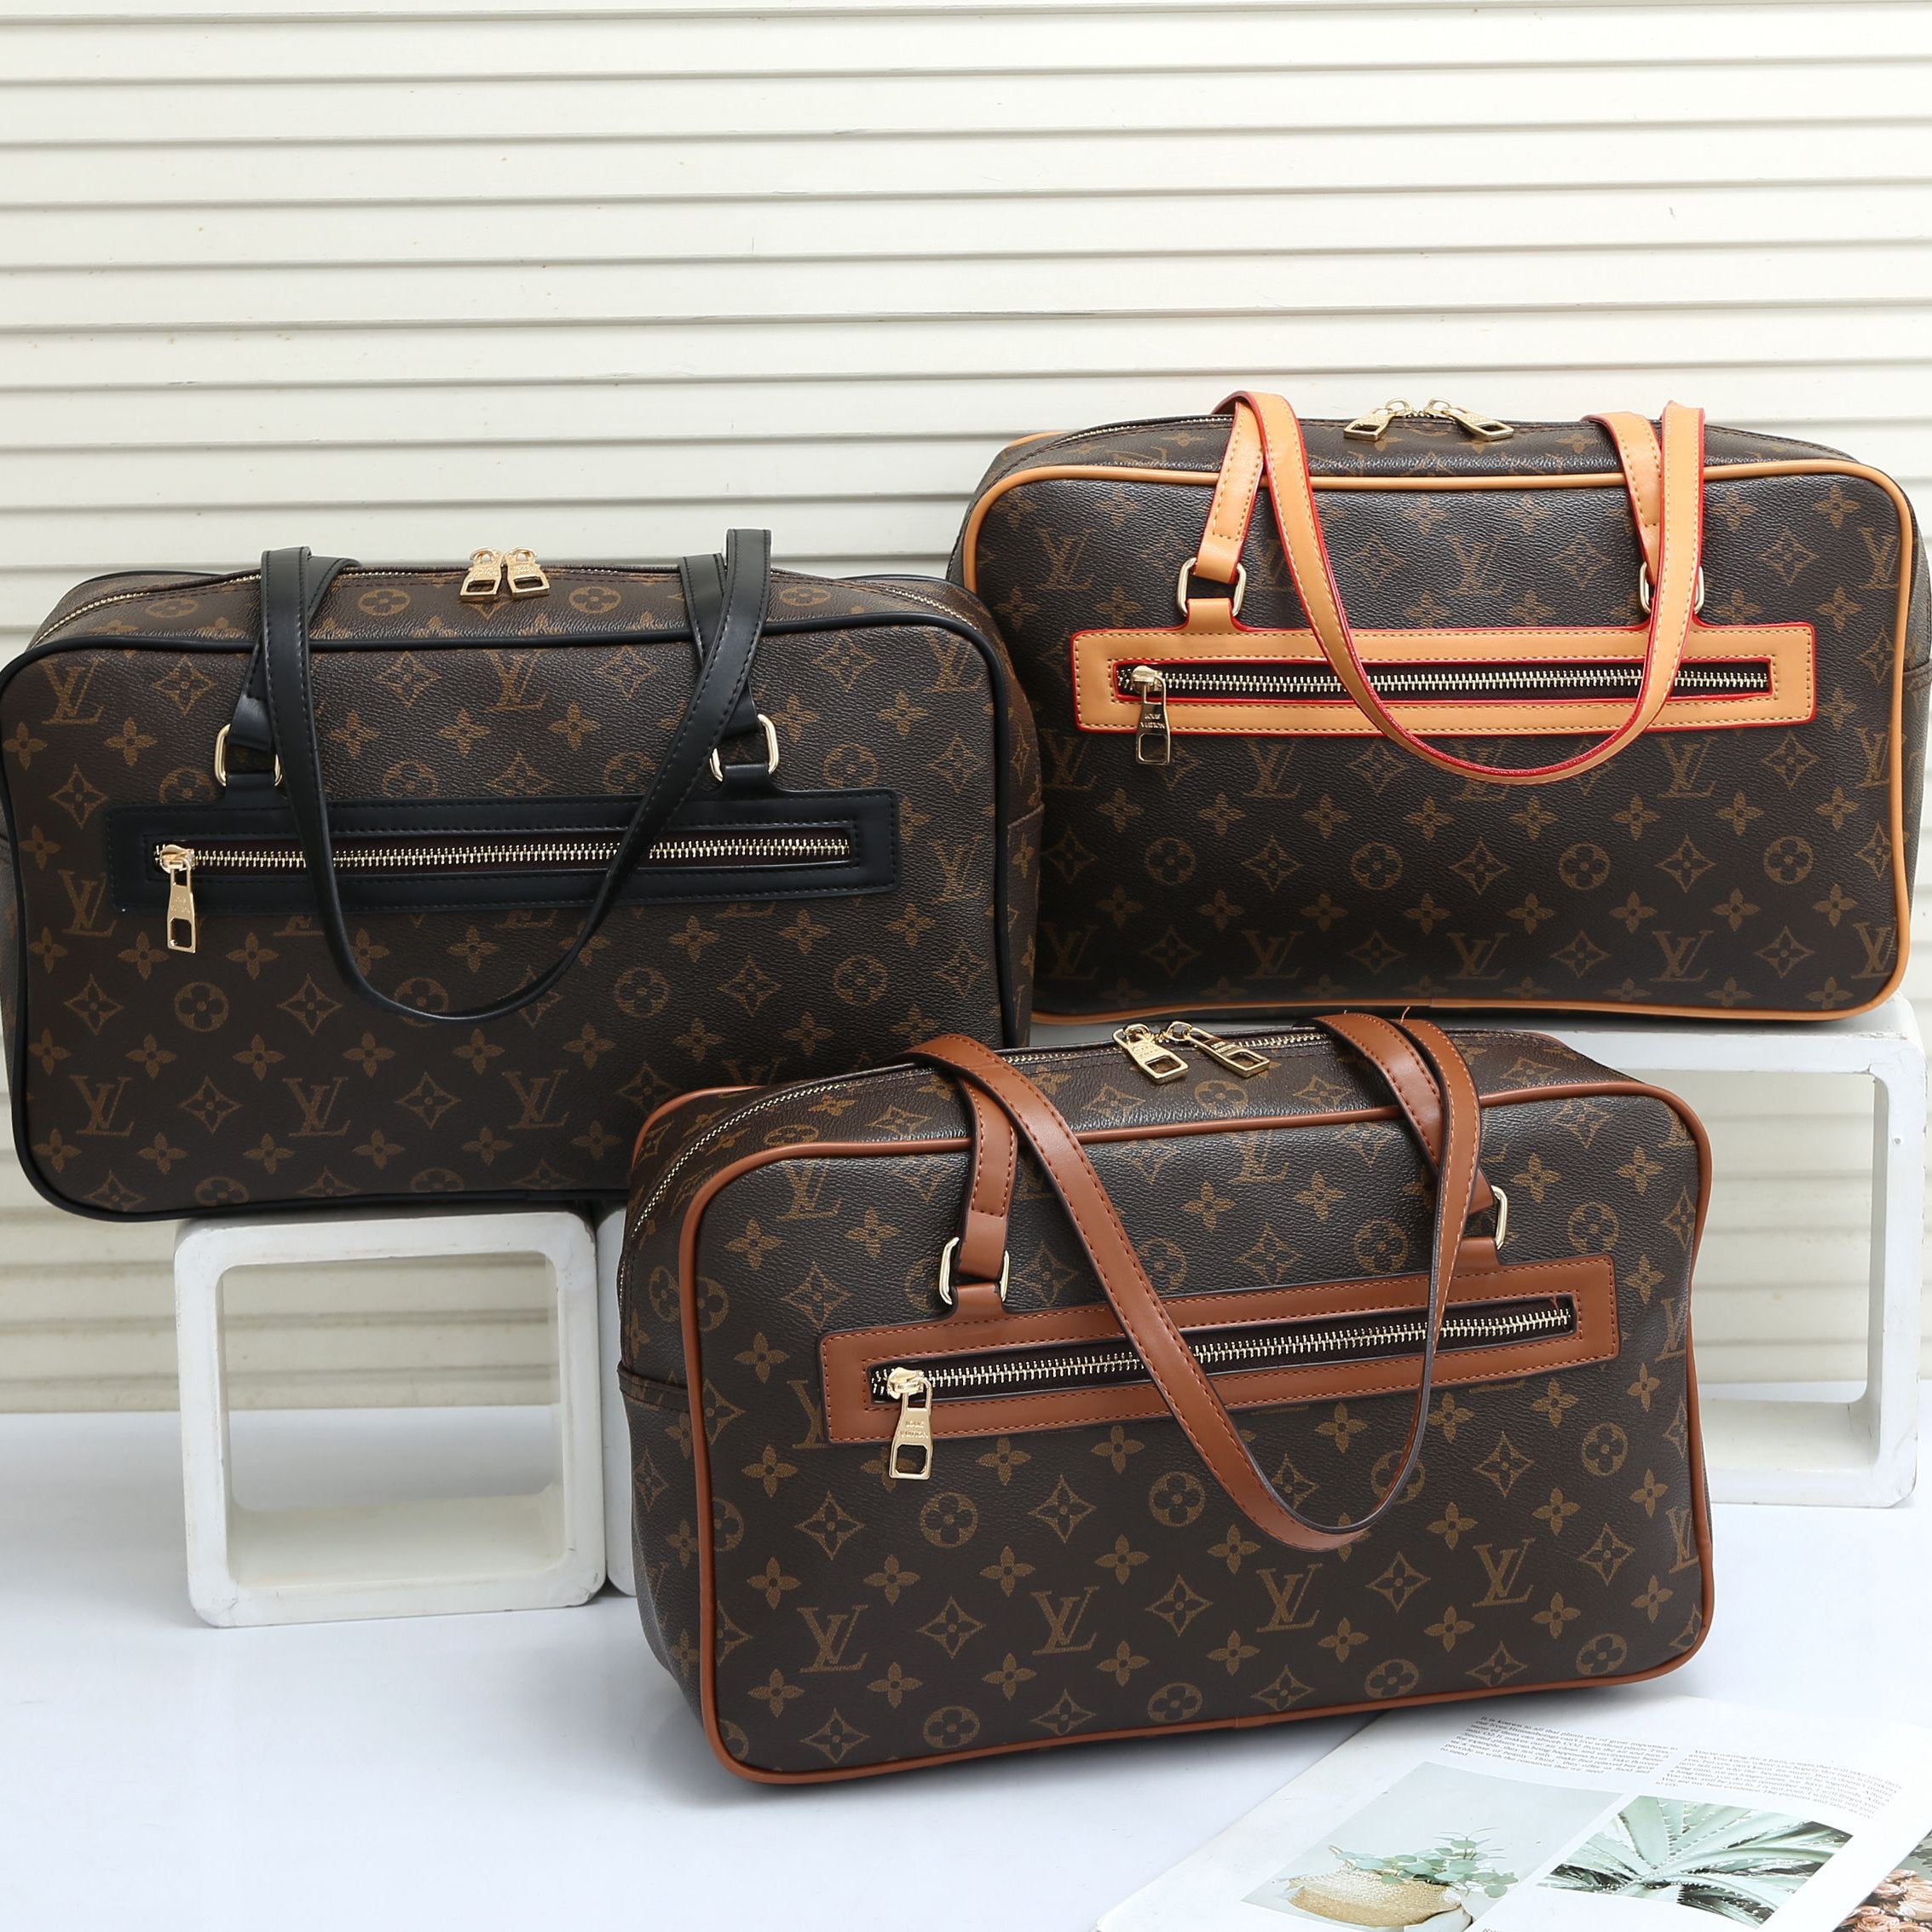 LV Louis Vuitton Fashion Men's and Women's Handbags Shoulder Messenger Bags Shopping Bags